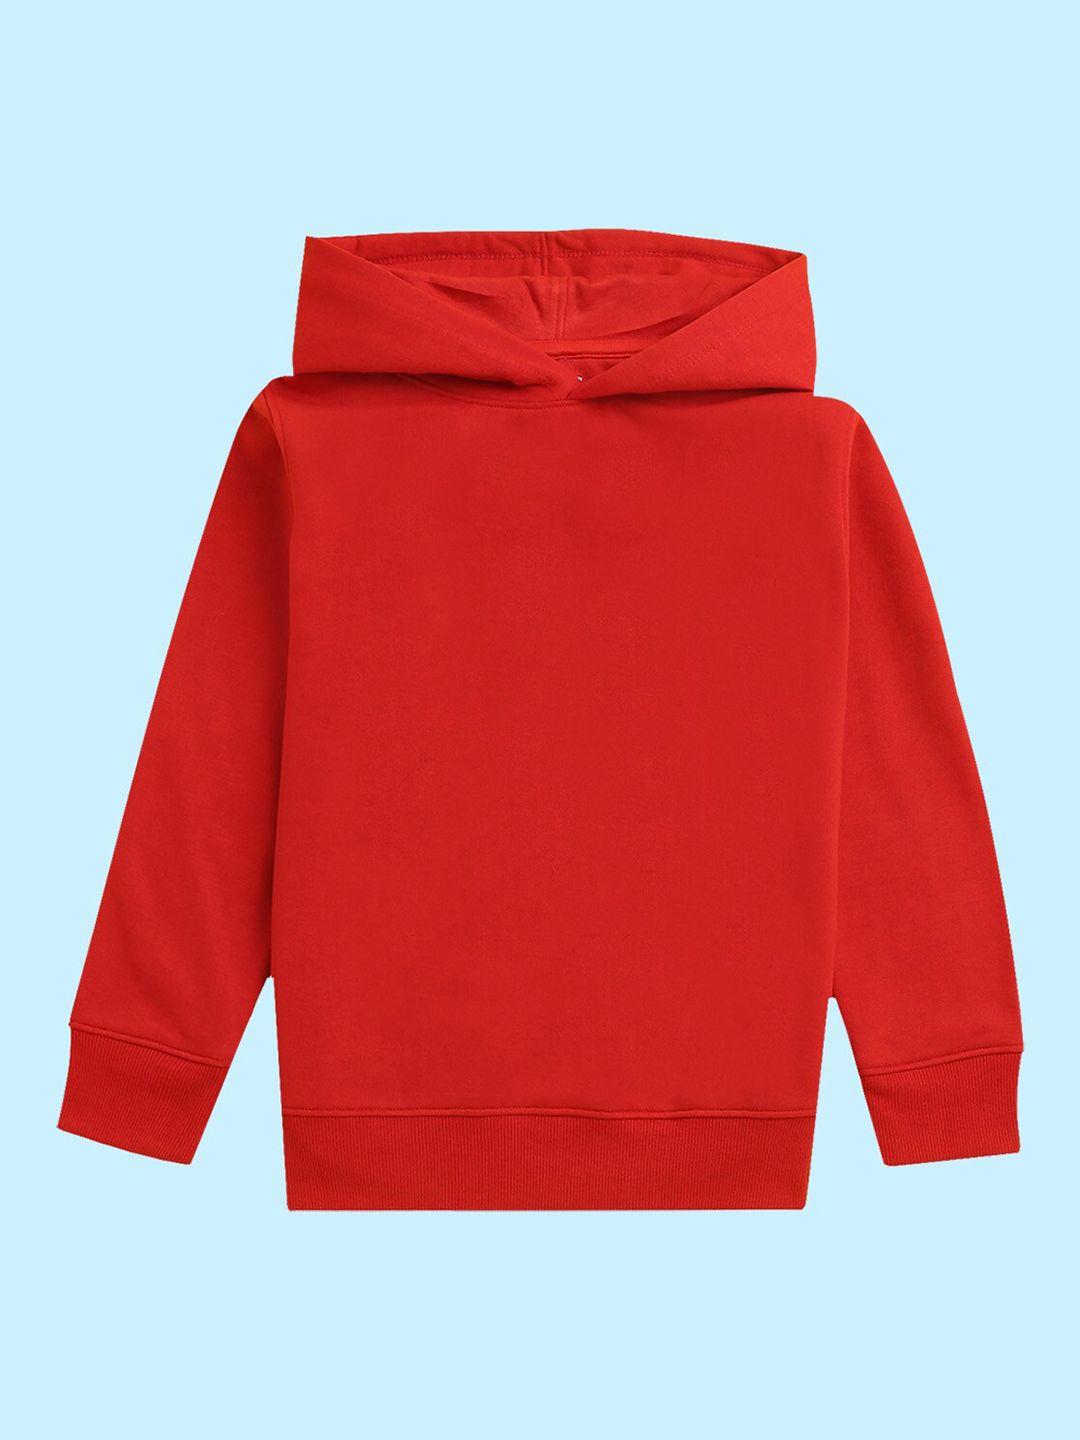 nusyl kids graphic printed hooded fleece sweatshirt